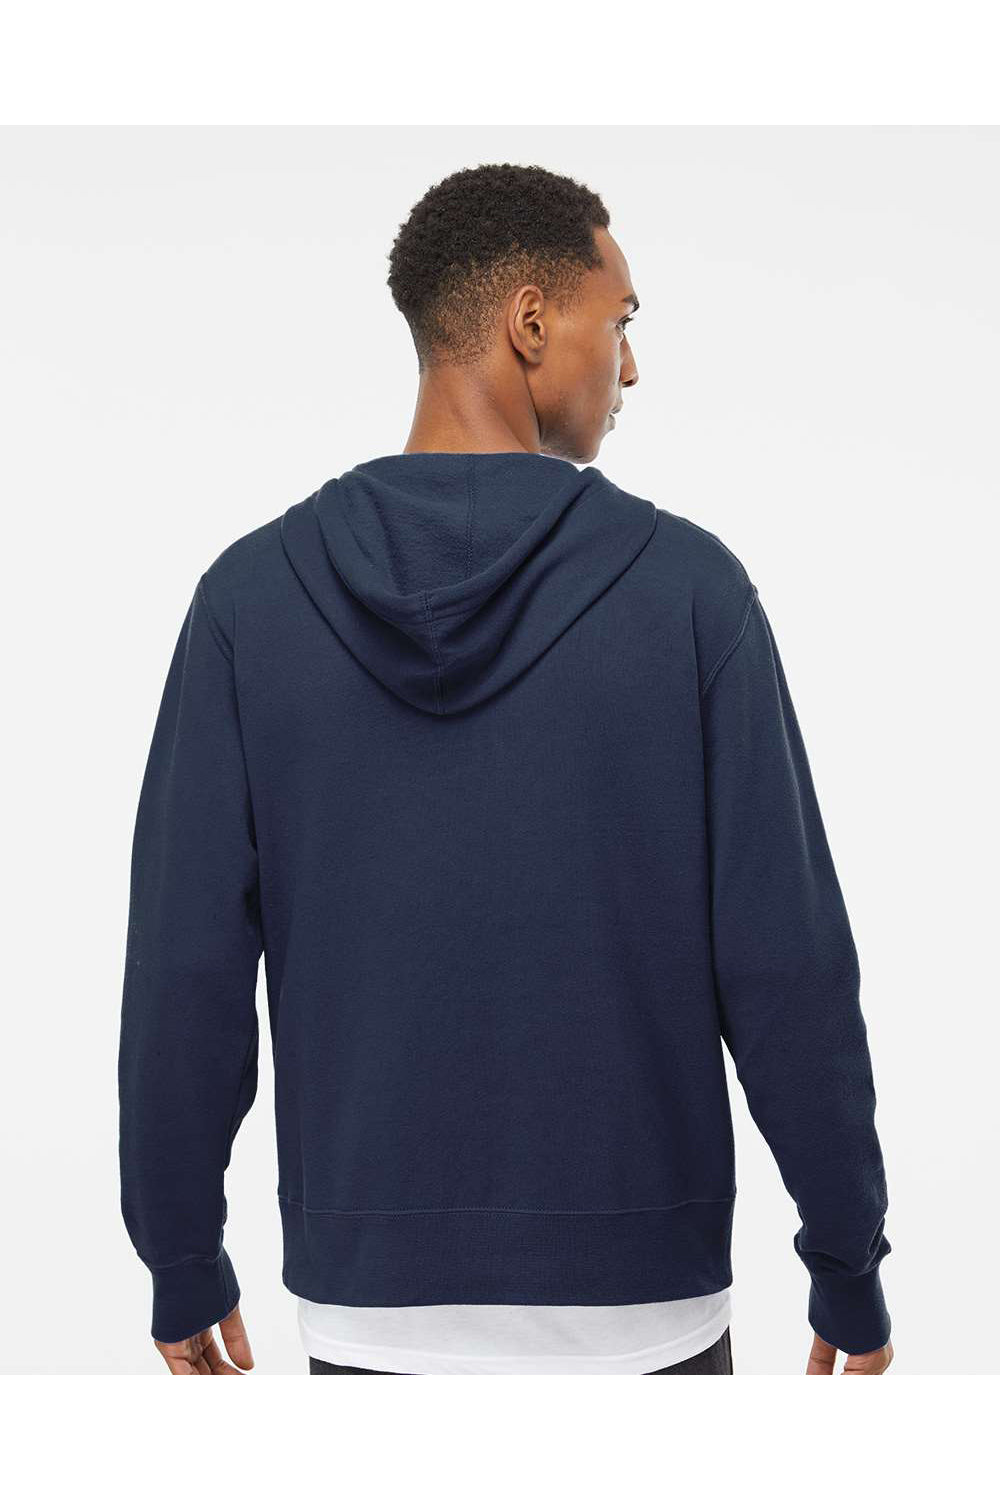 Independent Trading Co. AFX90UNZ Mens Full Zip Hooded Sweatshirt Hoodie Slate Blue Model Back